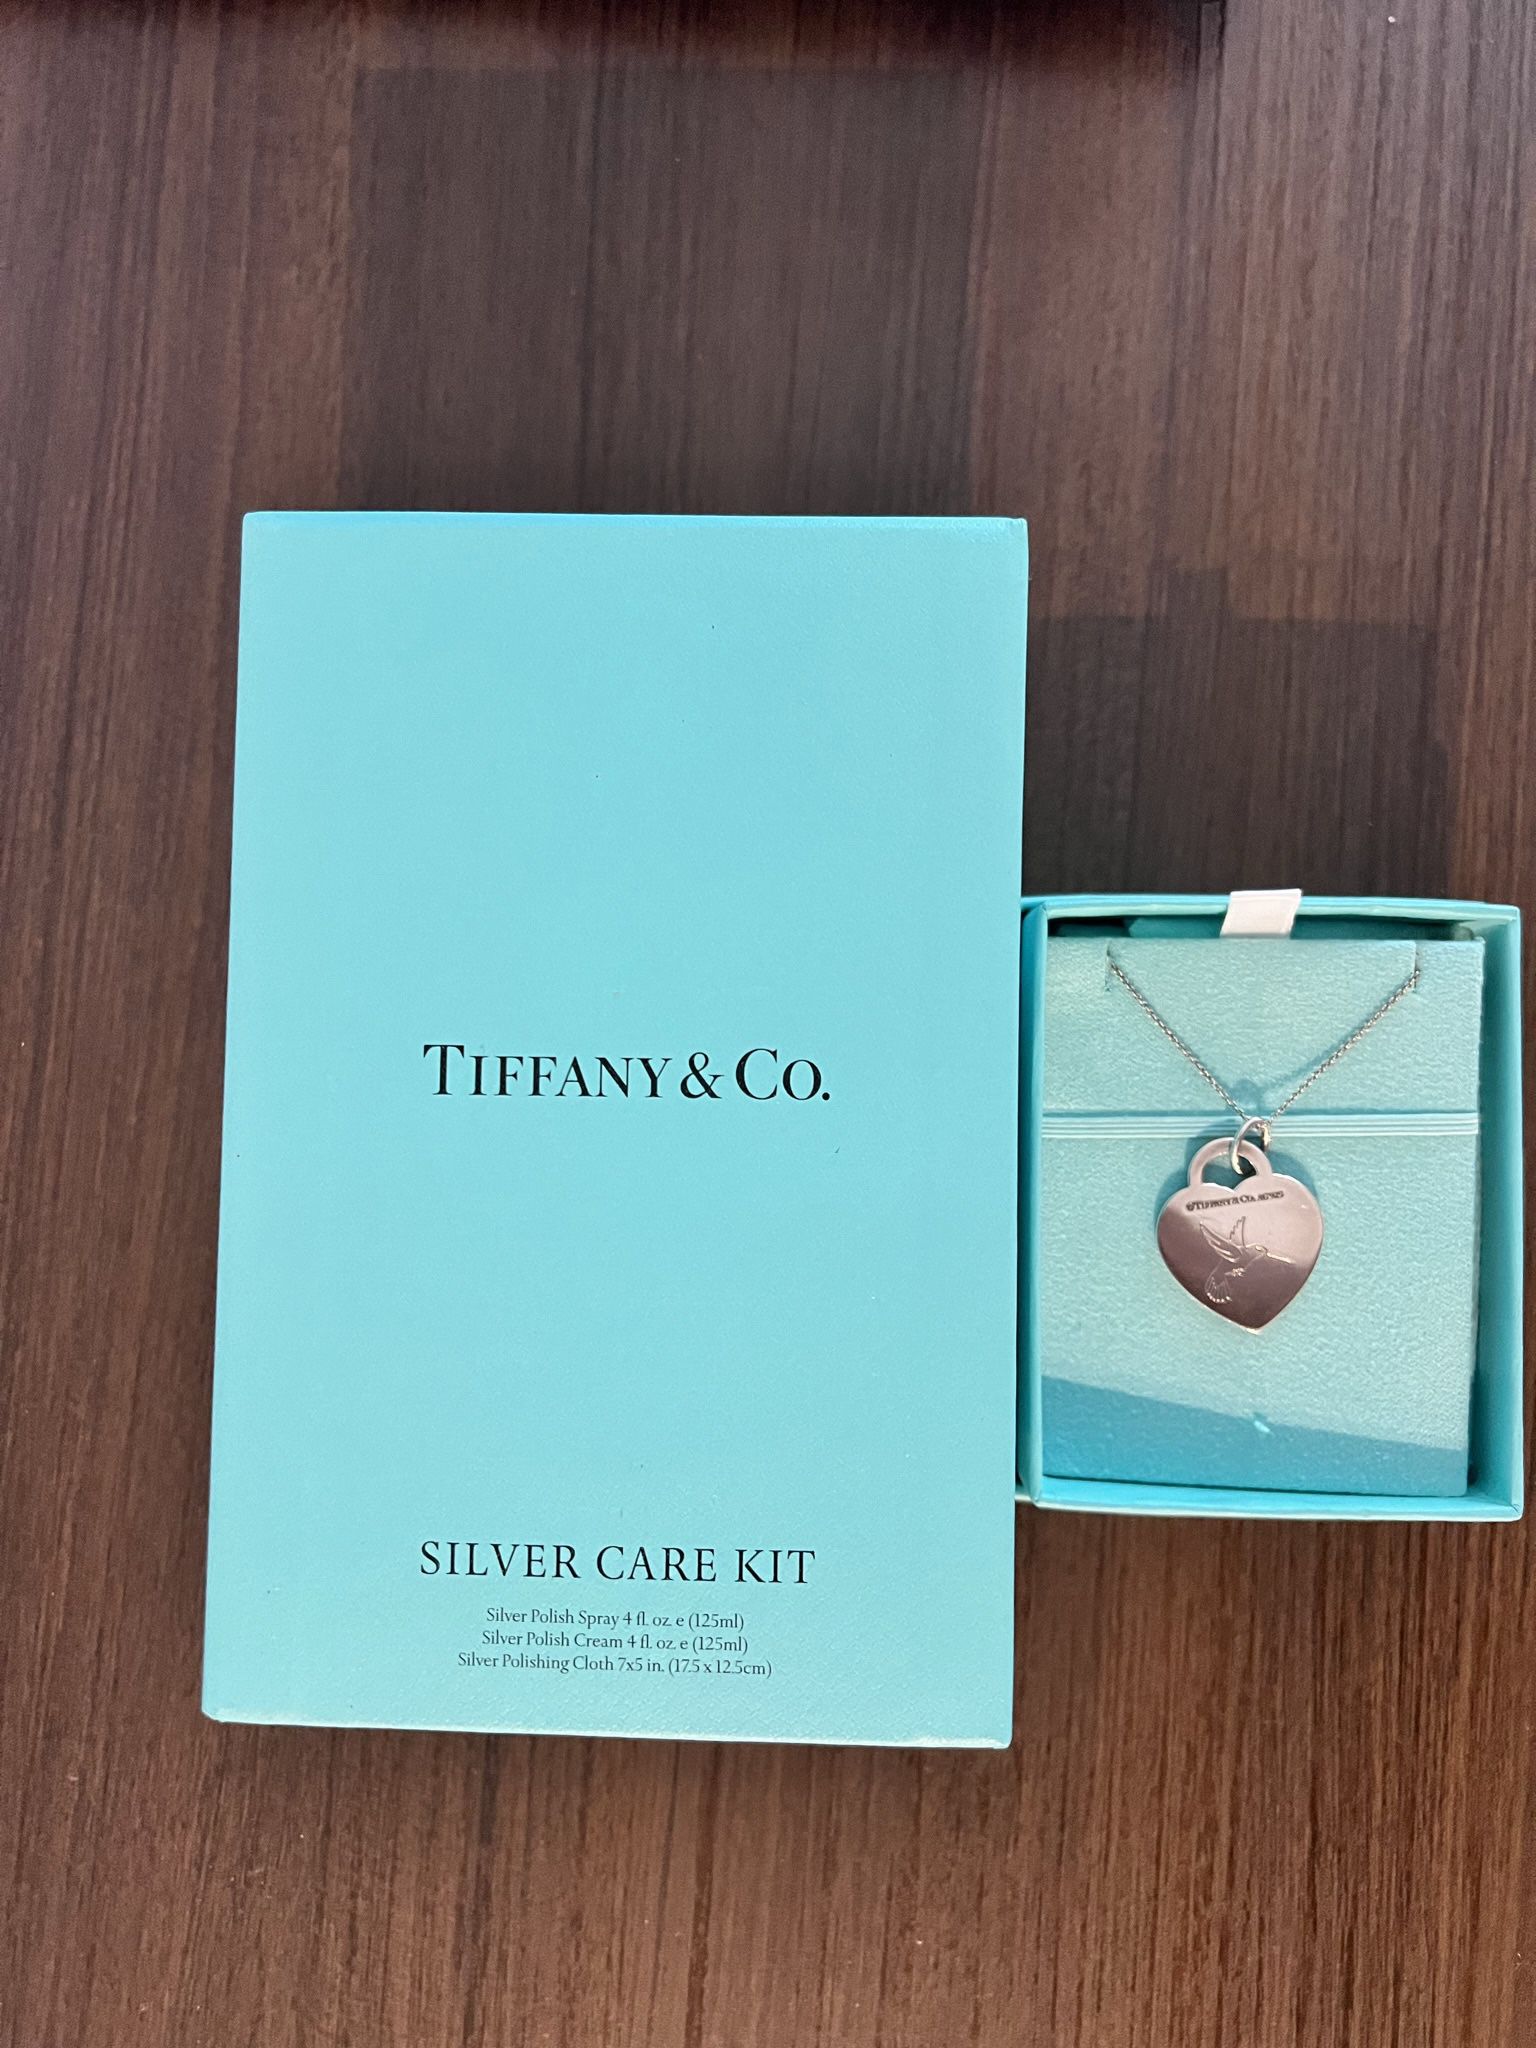 Tiffany Silver Care Kit with silver polish cream, polish spray and cloth.